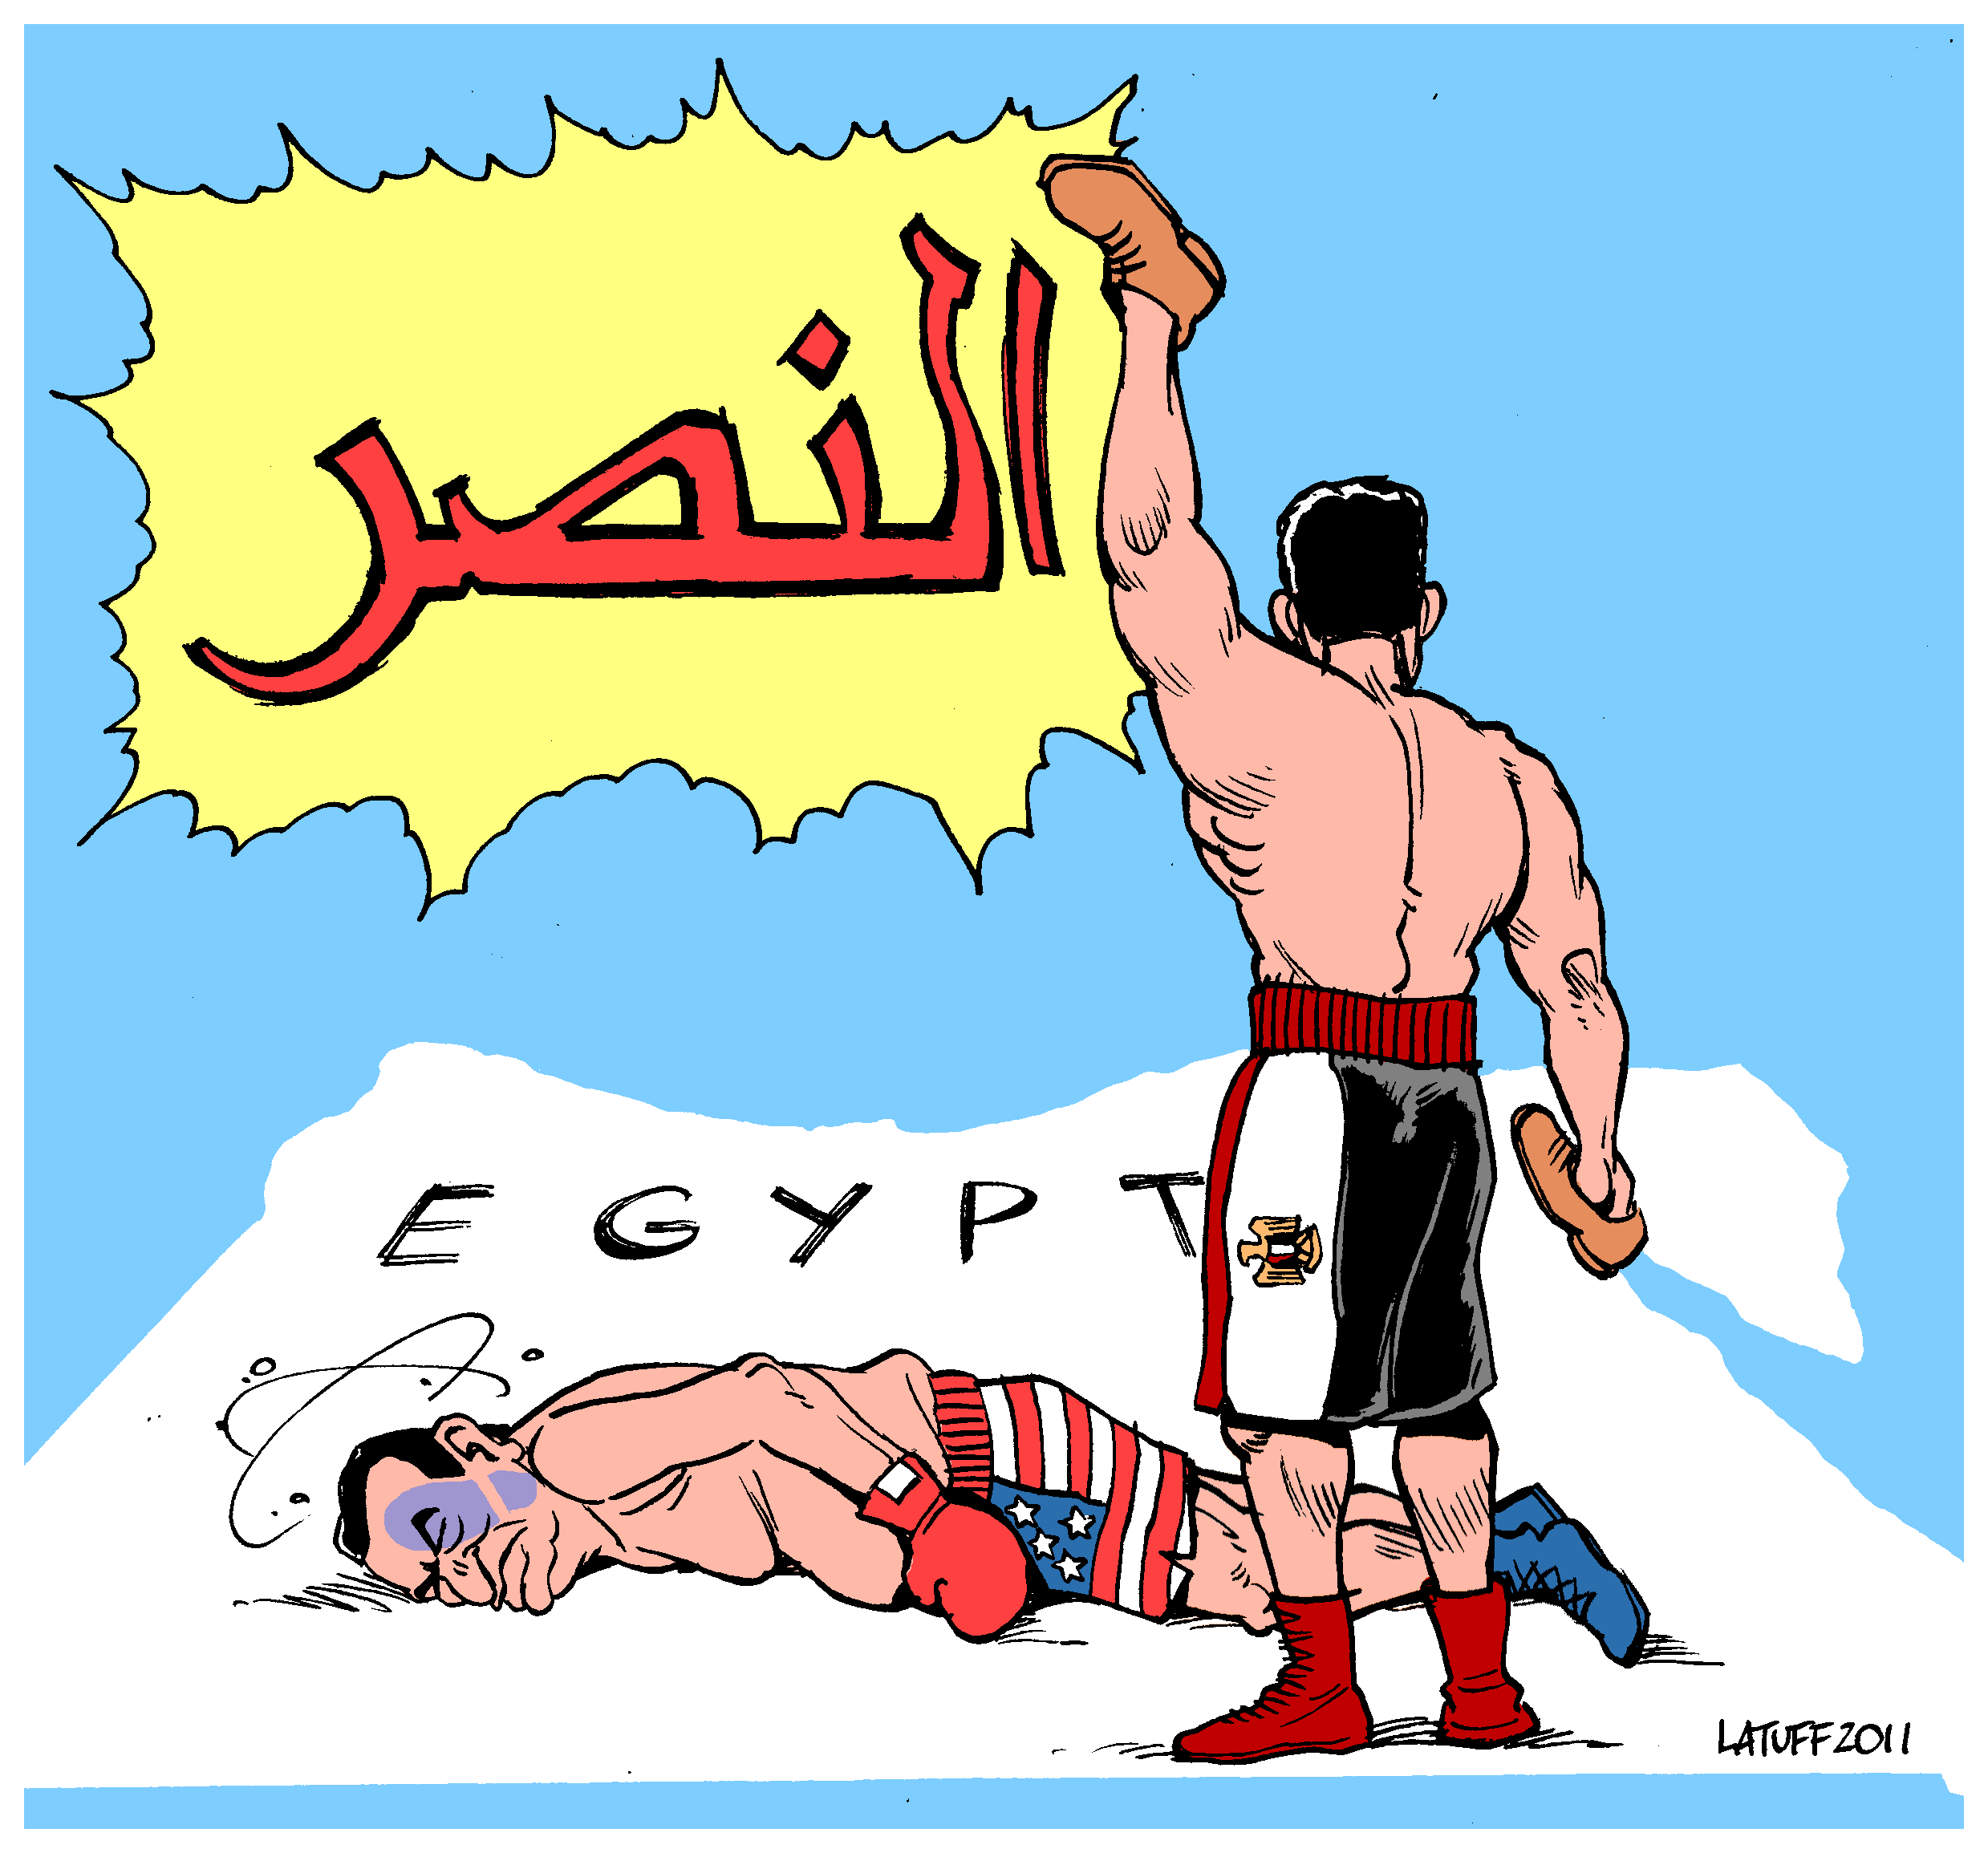 Egypt: Victory of Democracy